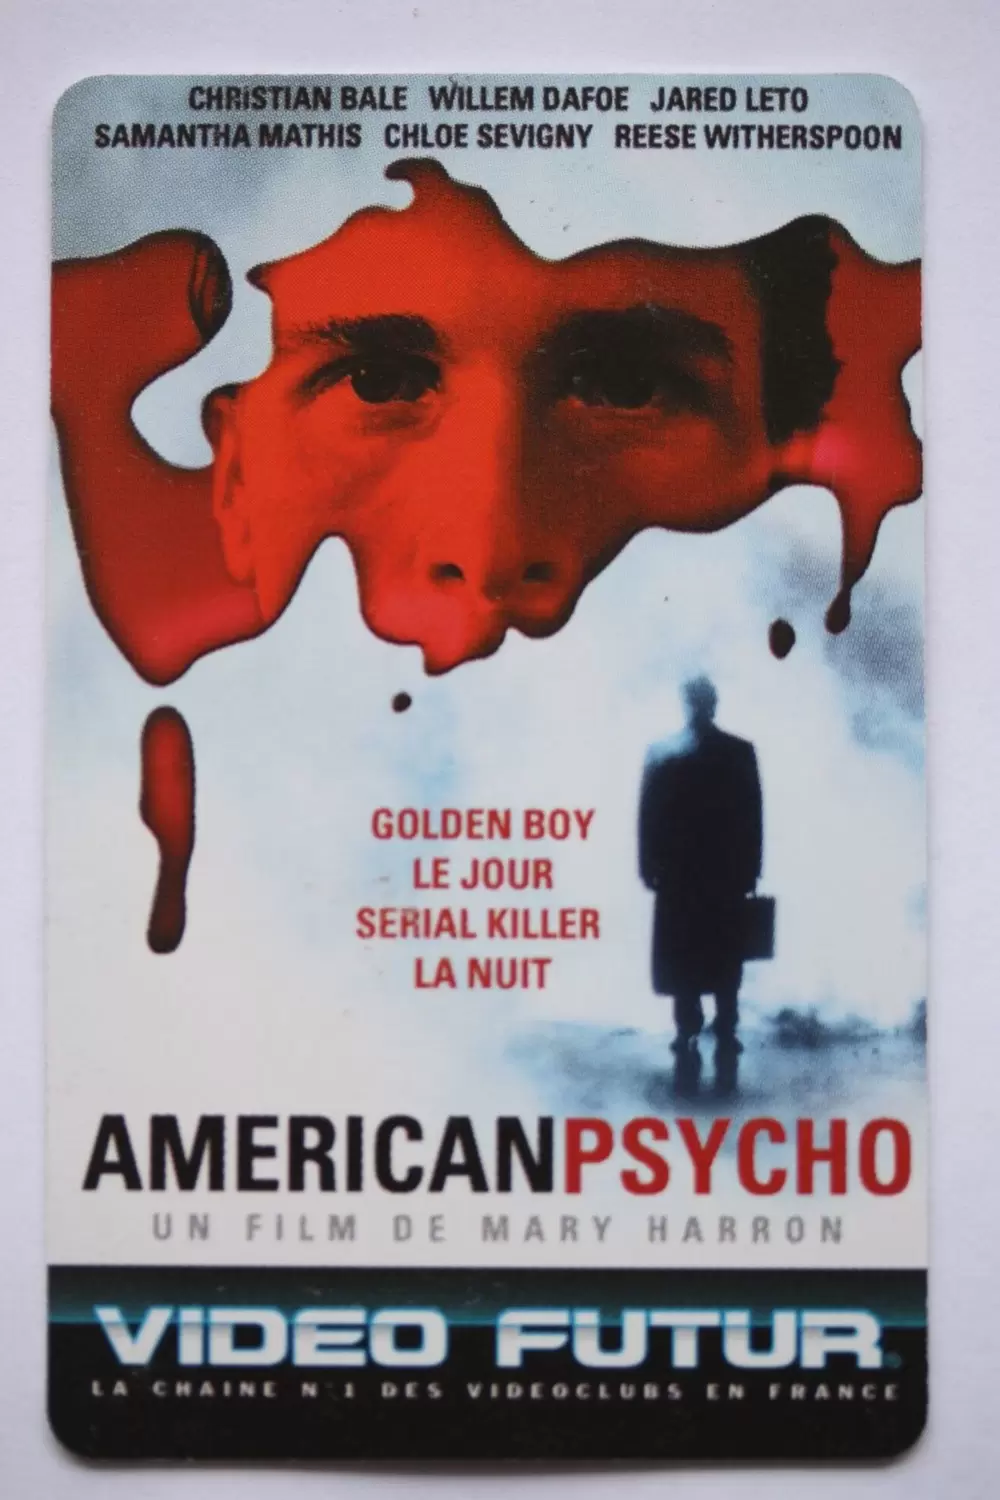 Cartes Vidéo Futur - American psycho